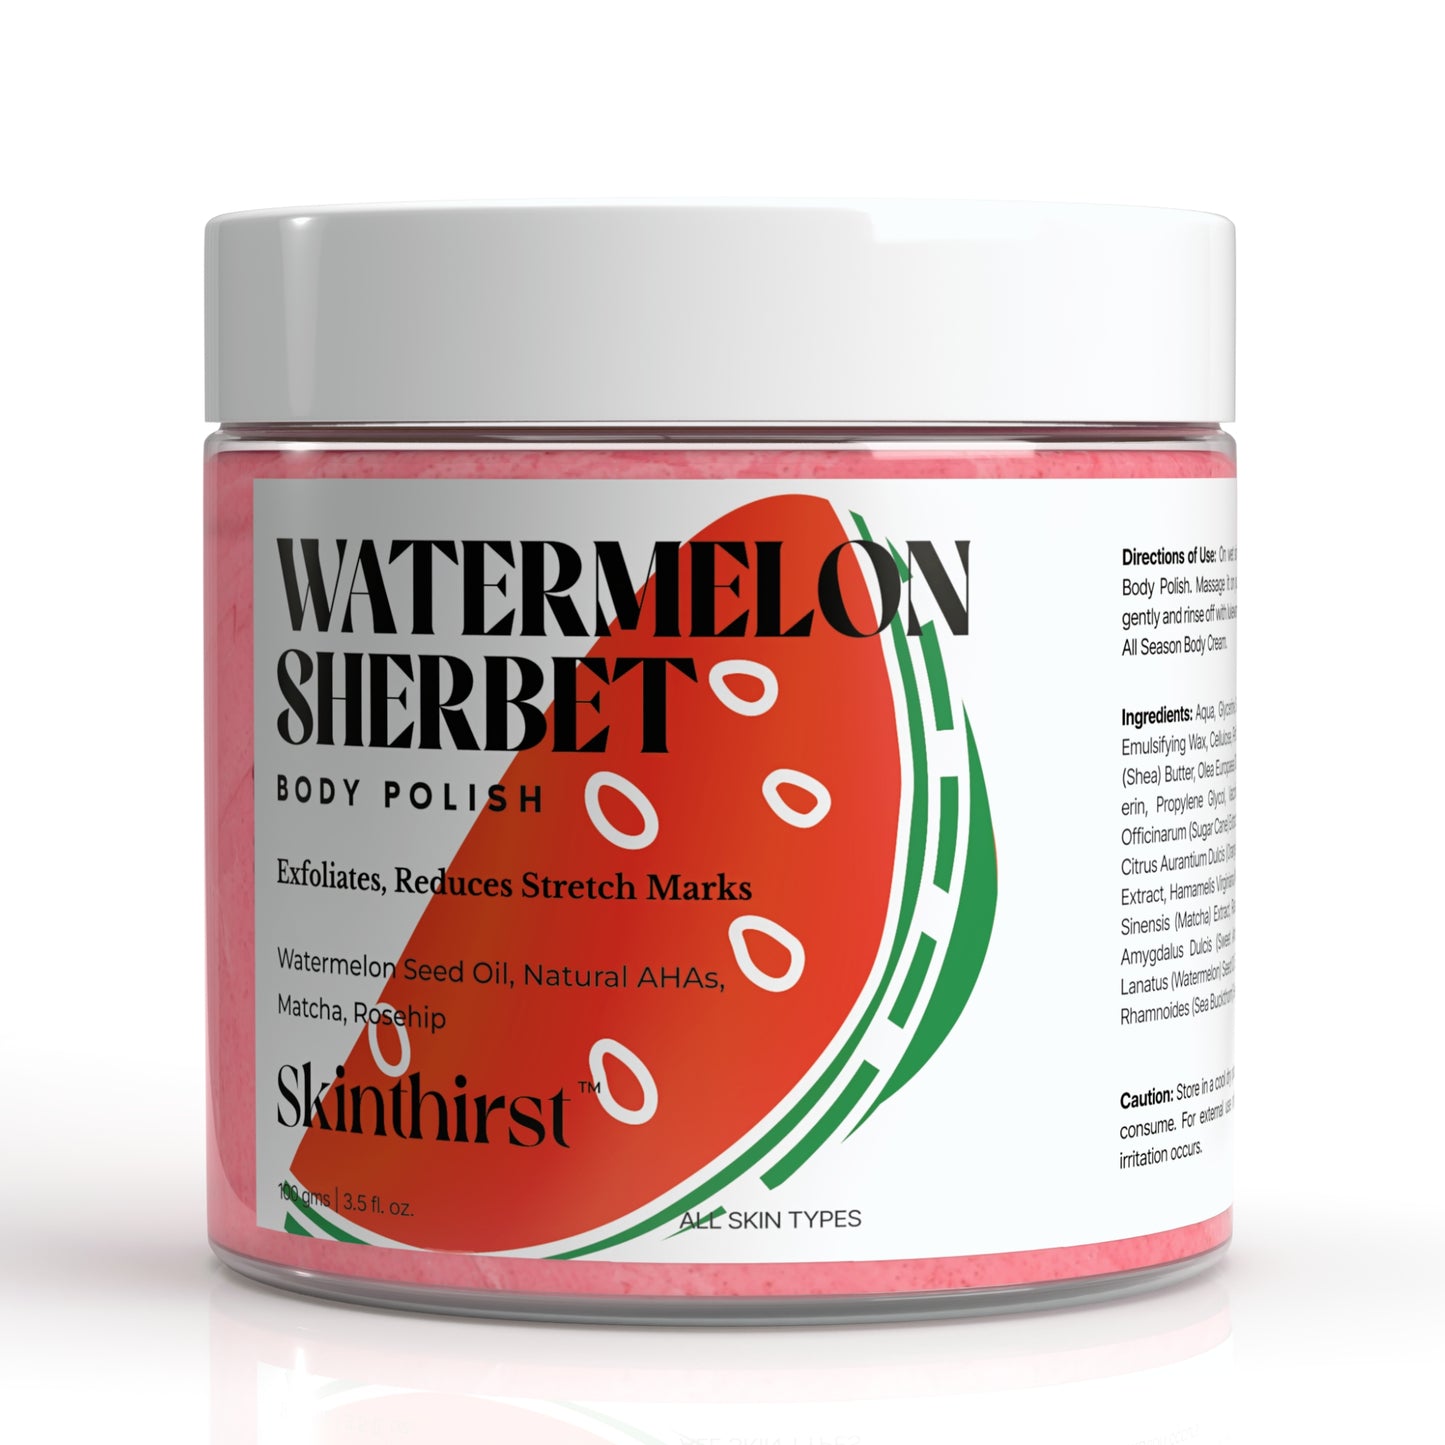 Watermelon Sherbet Body Polishing Scrub